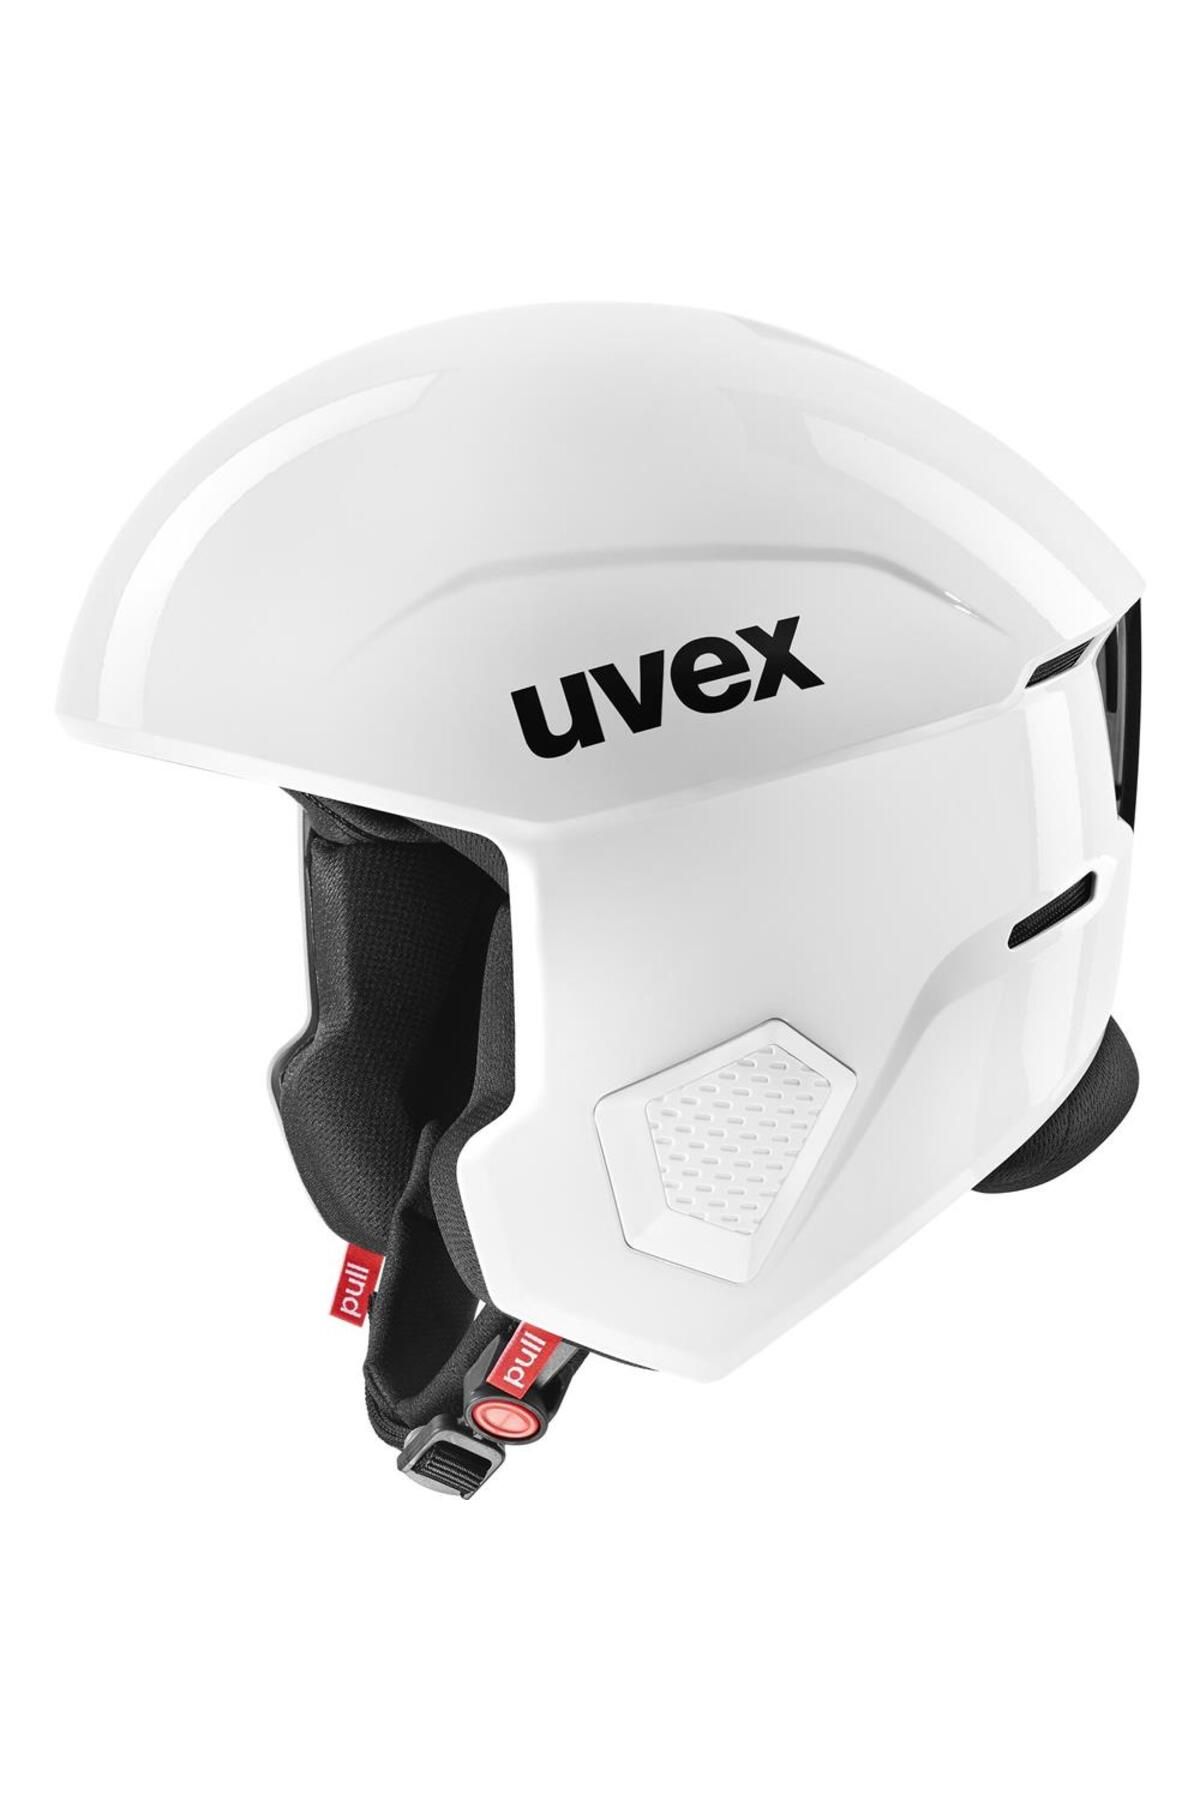 Uvex Invictus All Beyaz Kayak Kaskı